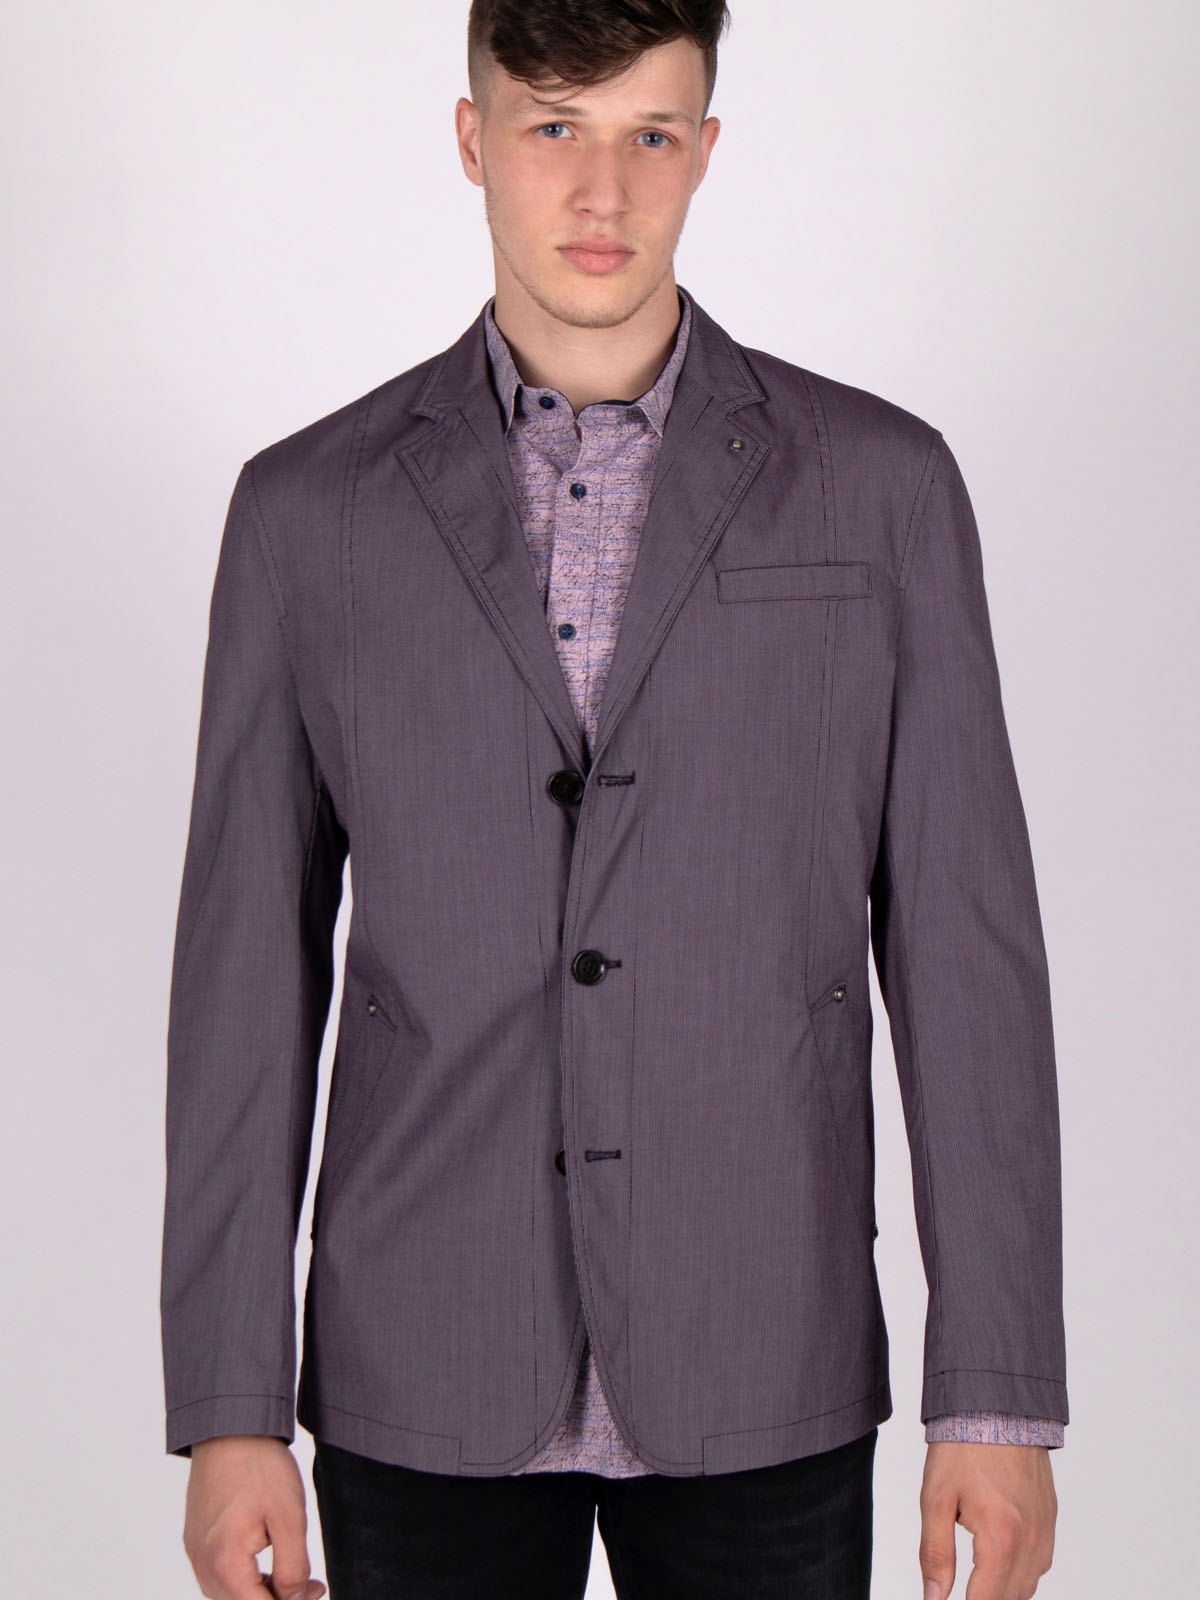 Jacket in purple with a fine stripe - 61005 € 23.62 img2